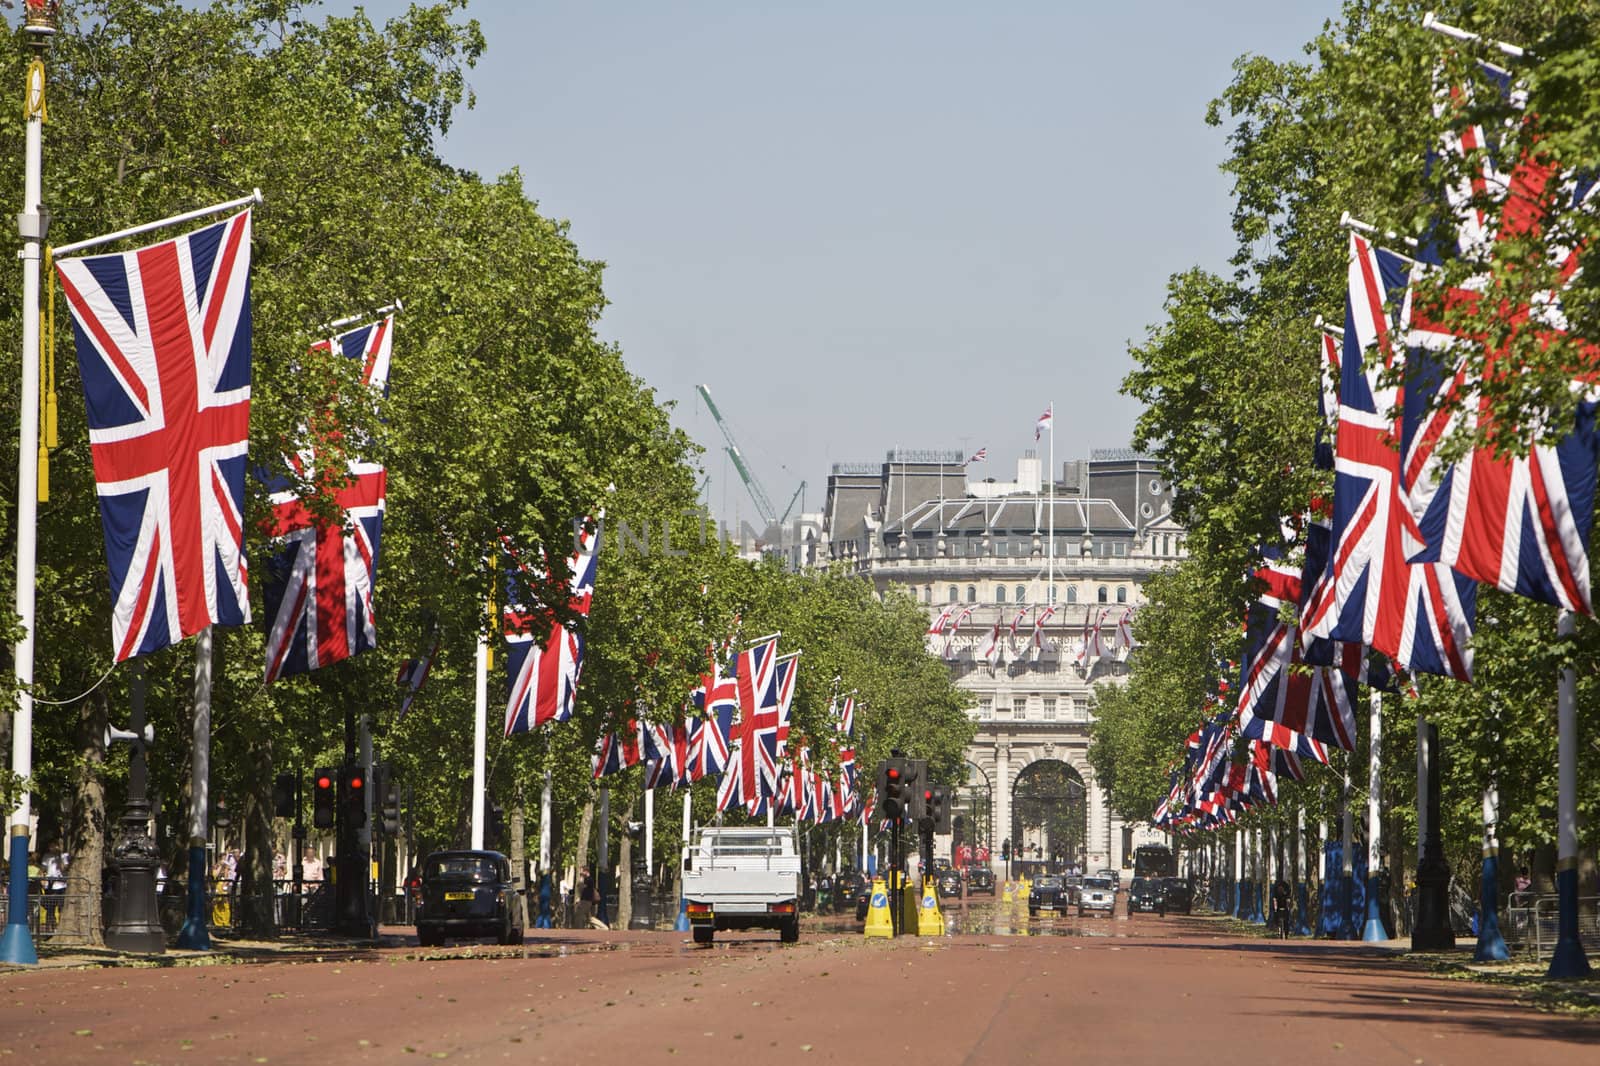 Buckingham Palace, Entrance by instinia